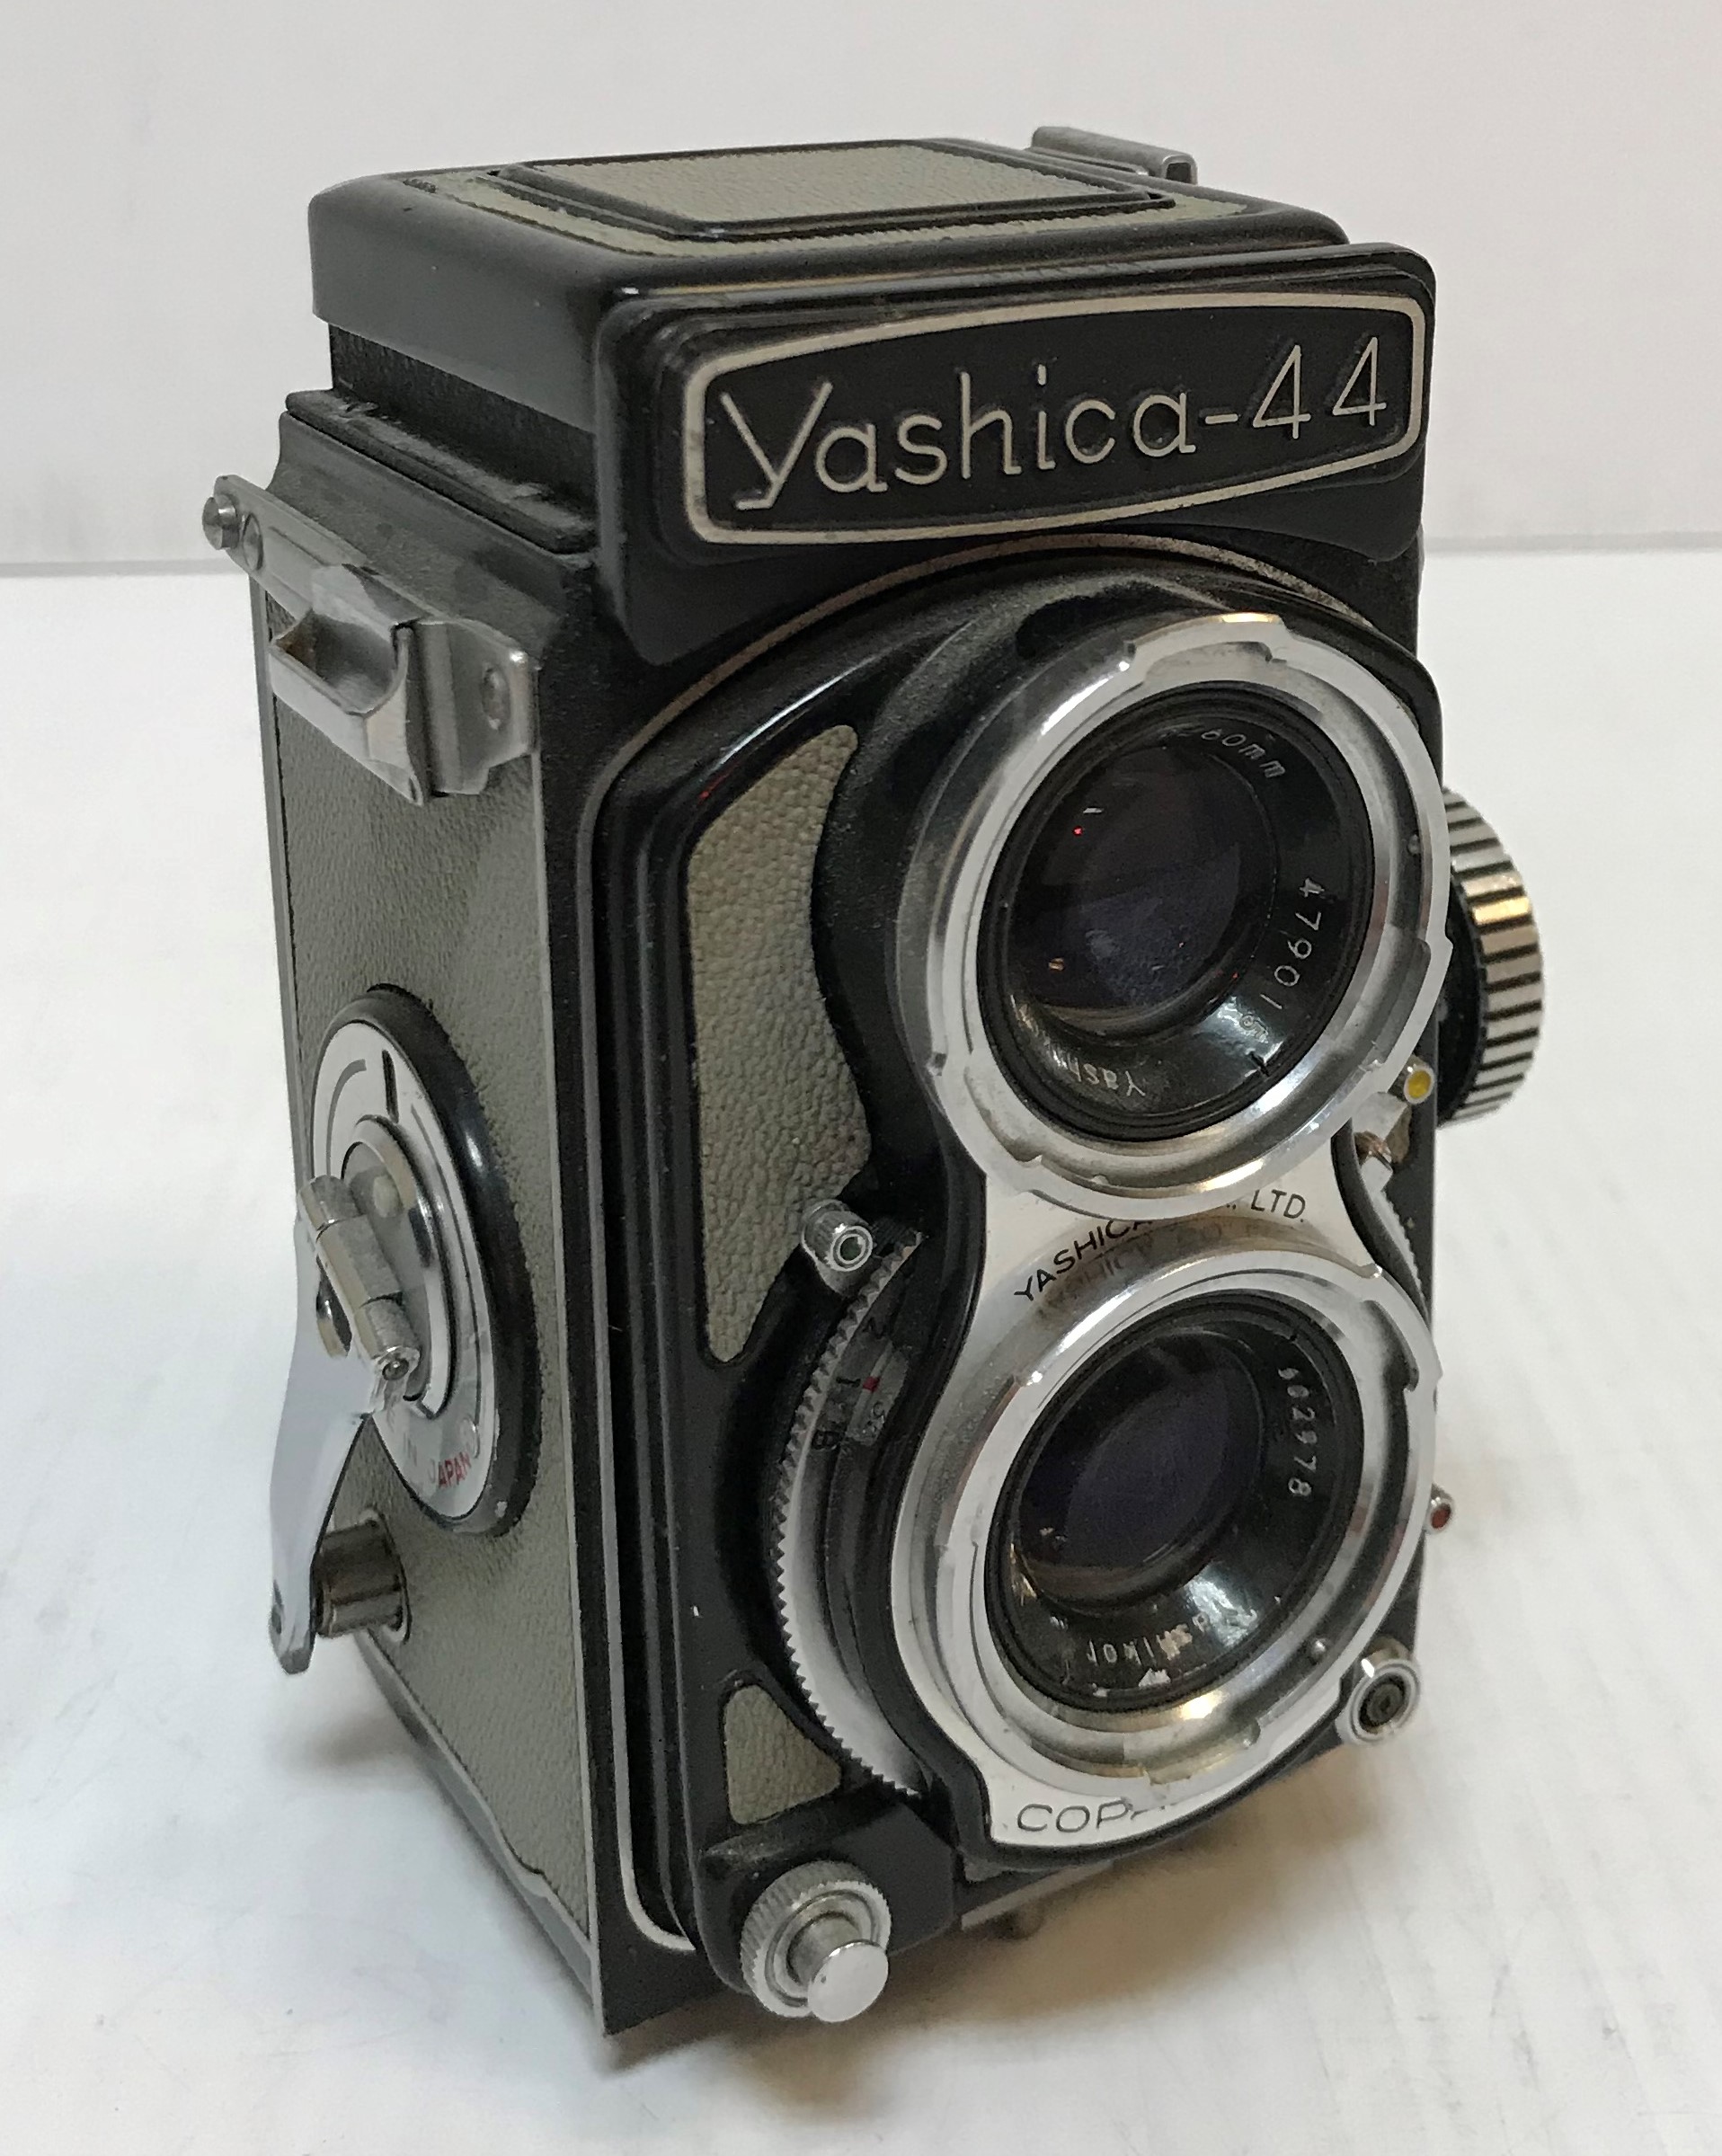 A Yashica 44 twin reflex camera, black and pale grey colourway (No.